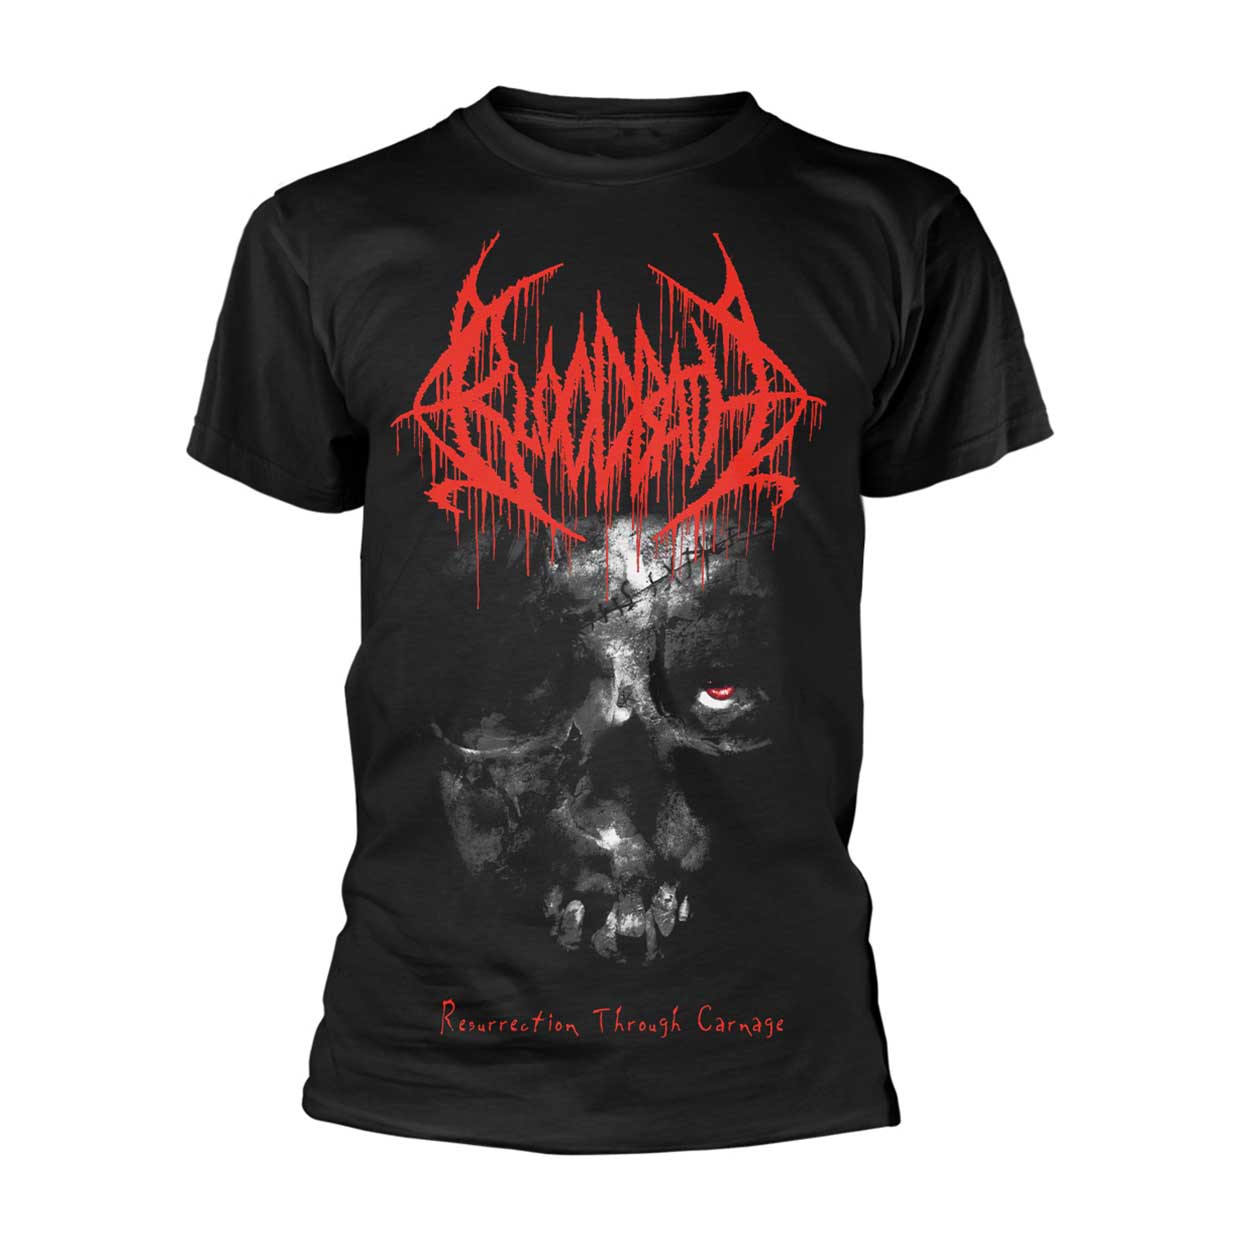 Bloodbath "Resurrection" T shirt